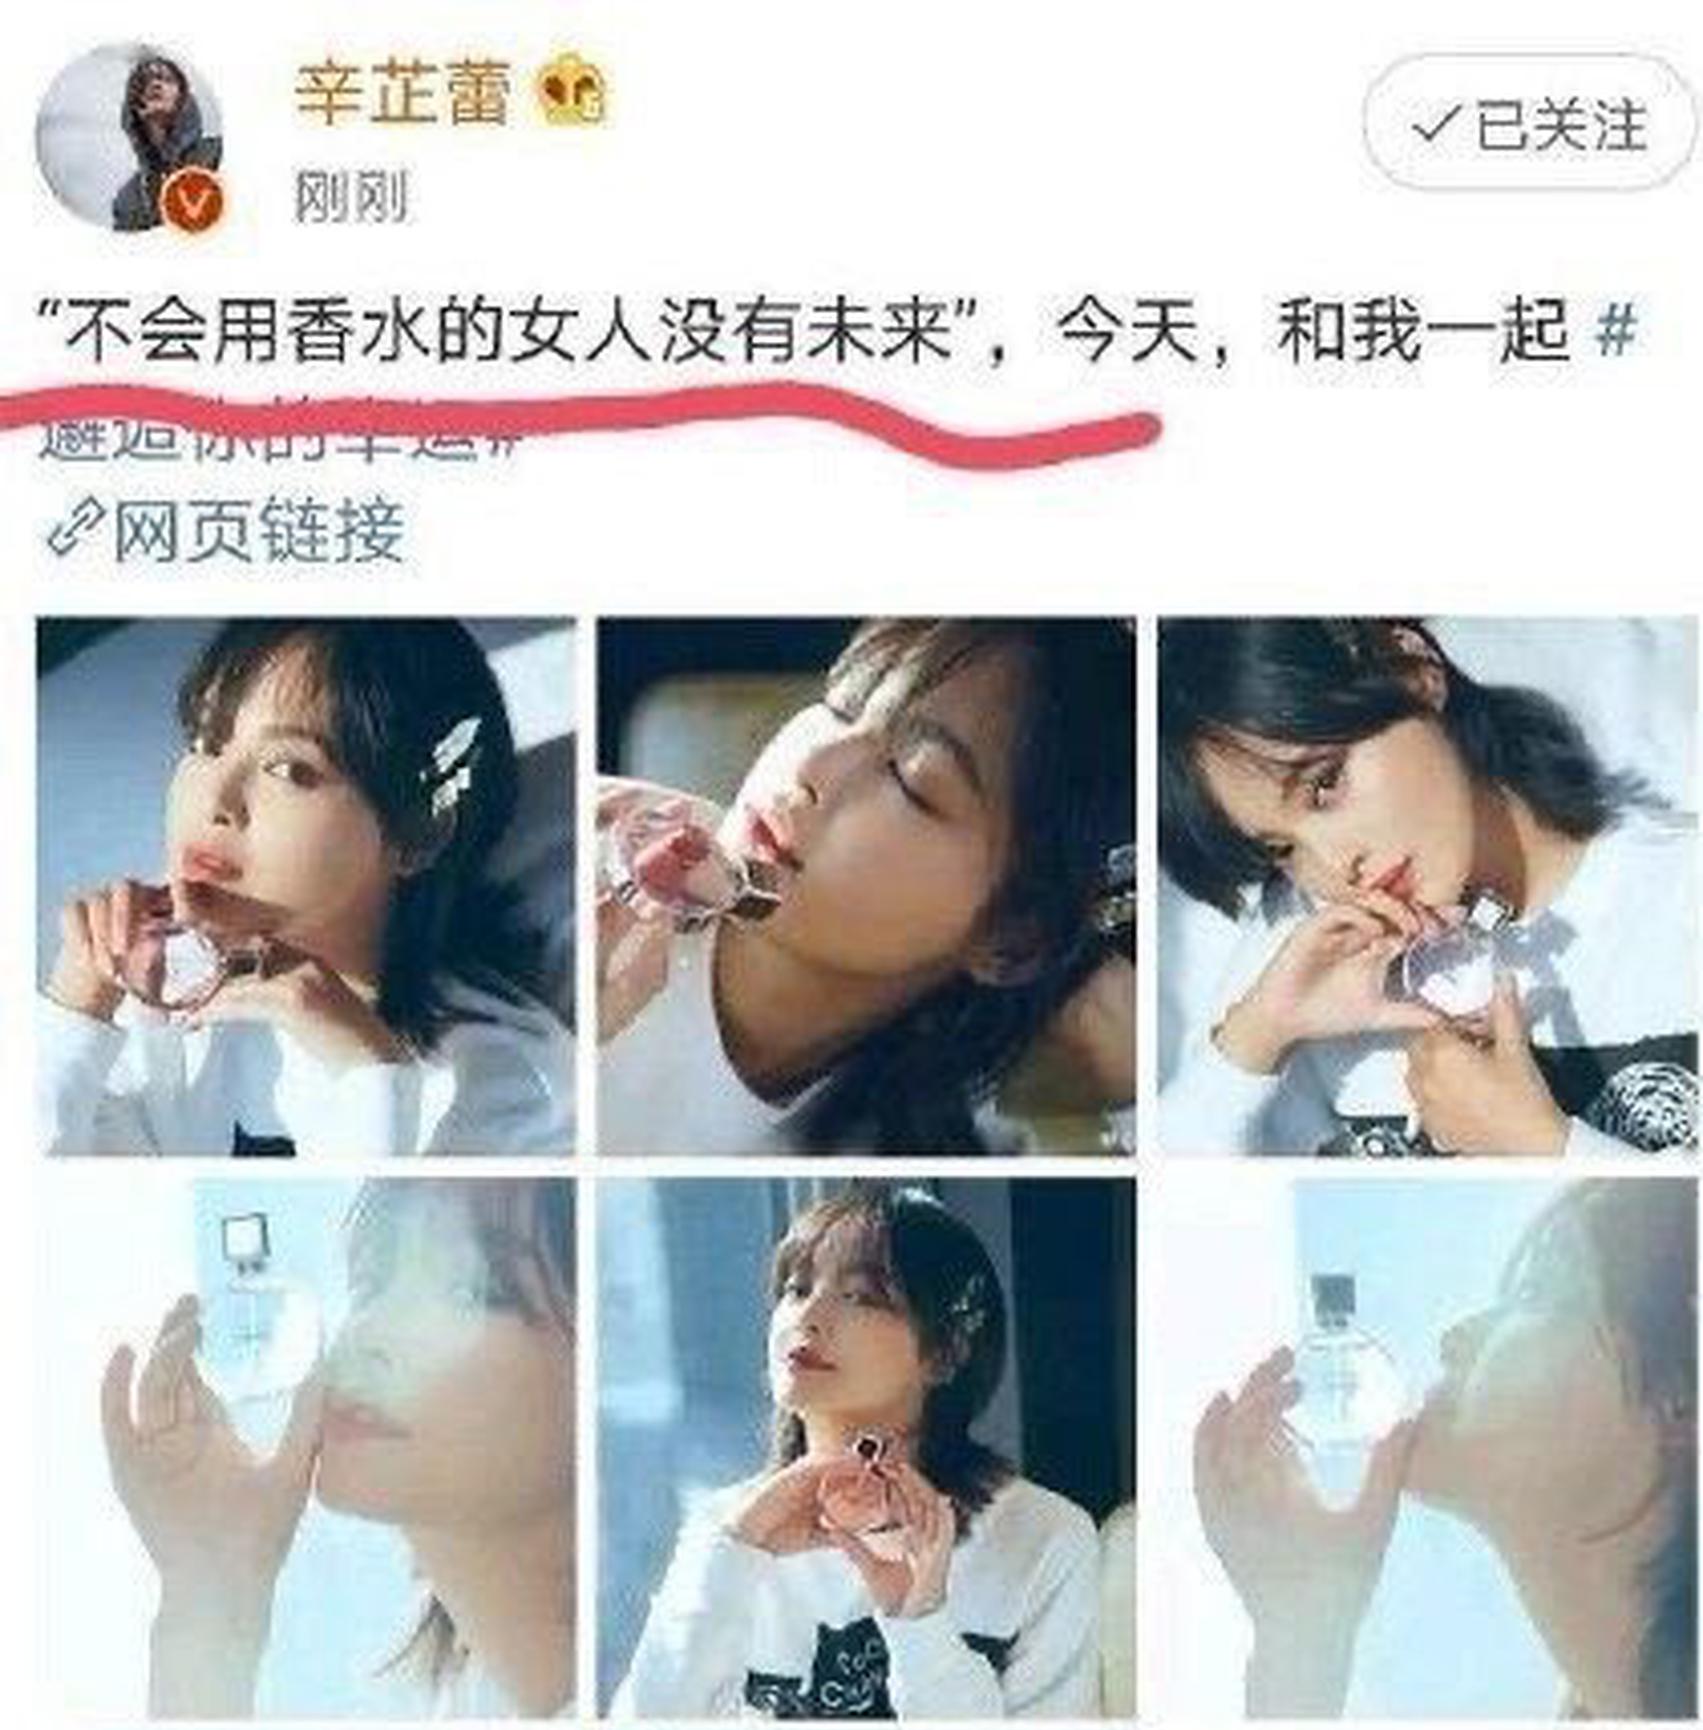 CHANEL妇女节香水广告女主辛芷蕾微博文案引争议 CHANEL则暂未对相关消息做出回应